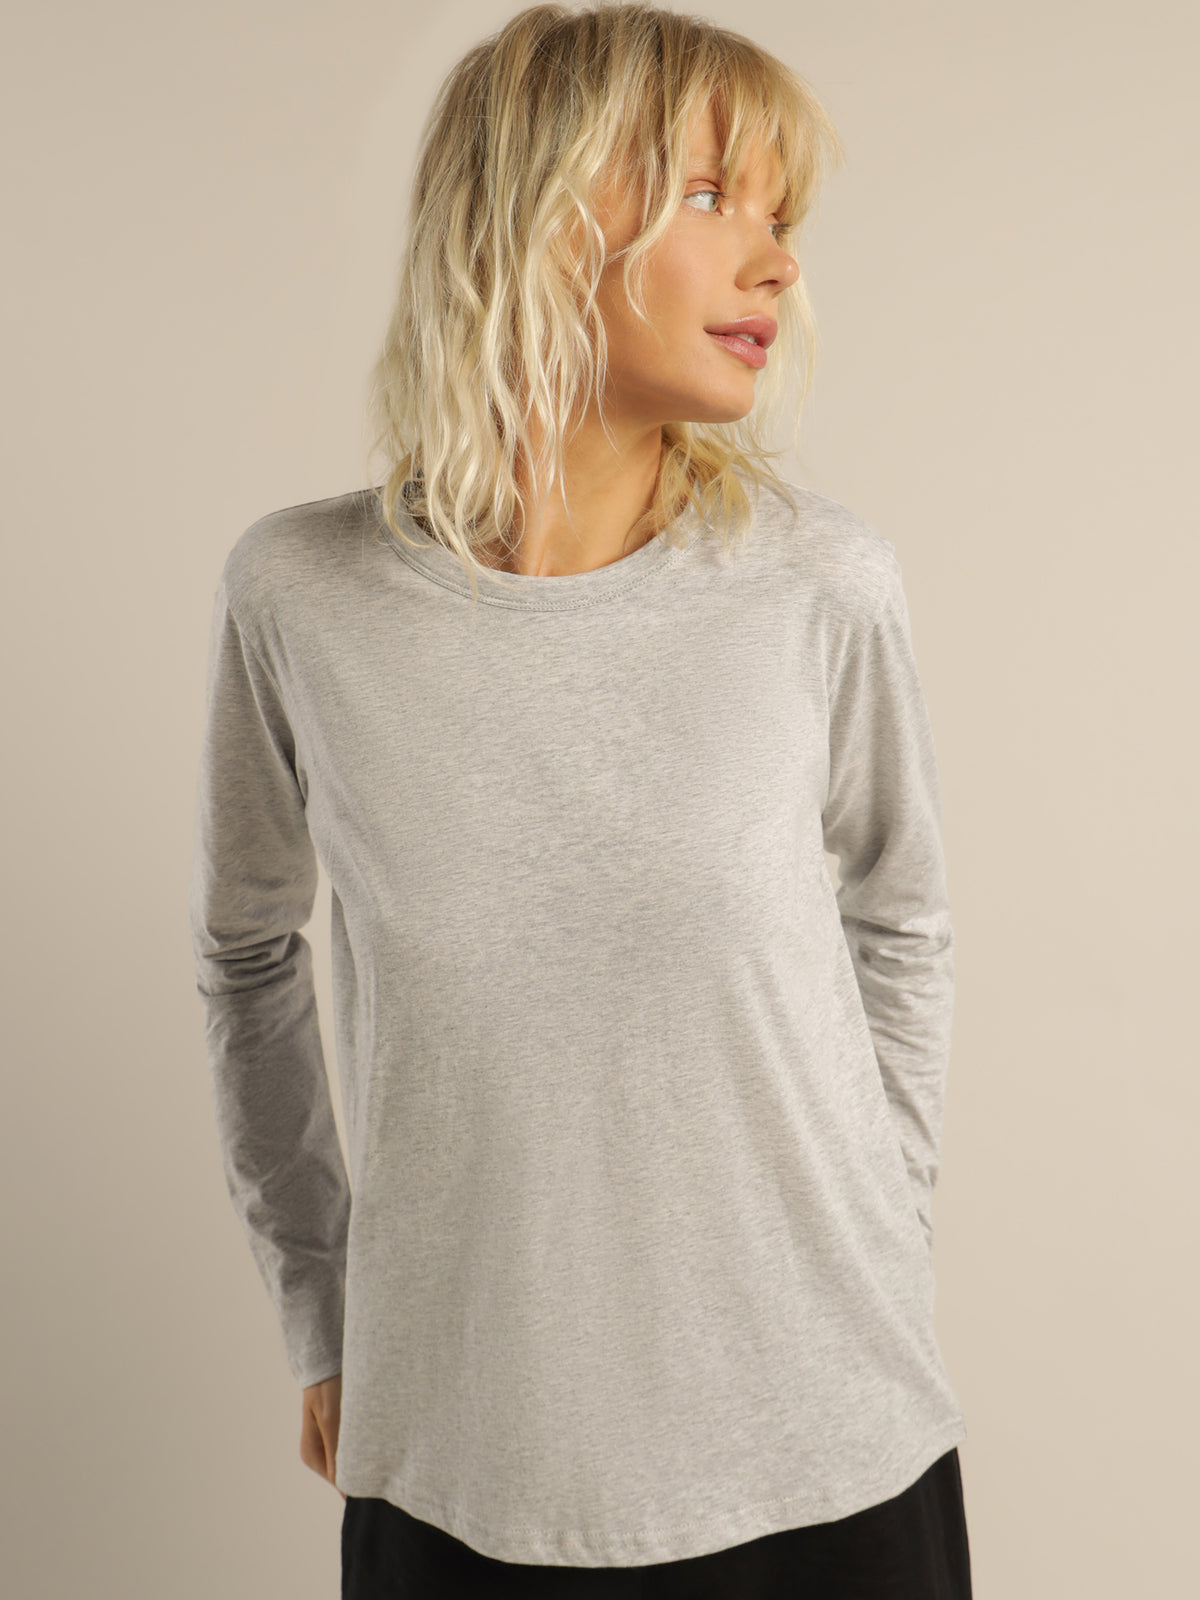 Ava Long Sleeve Top in Grey